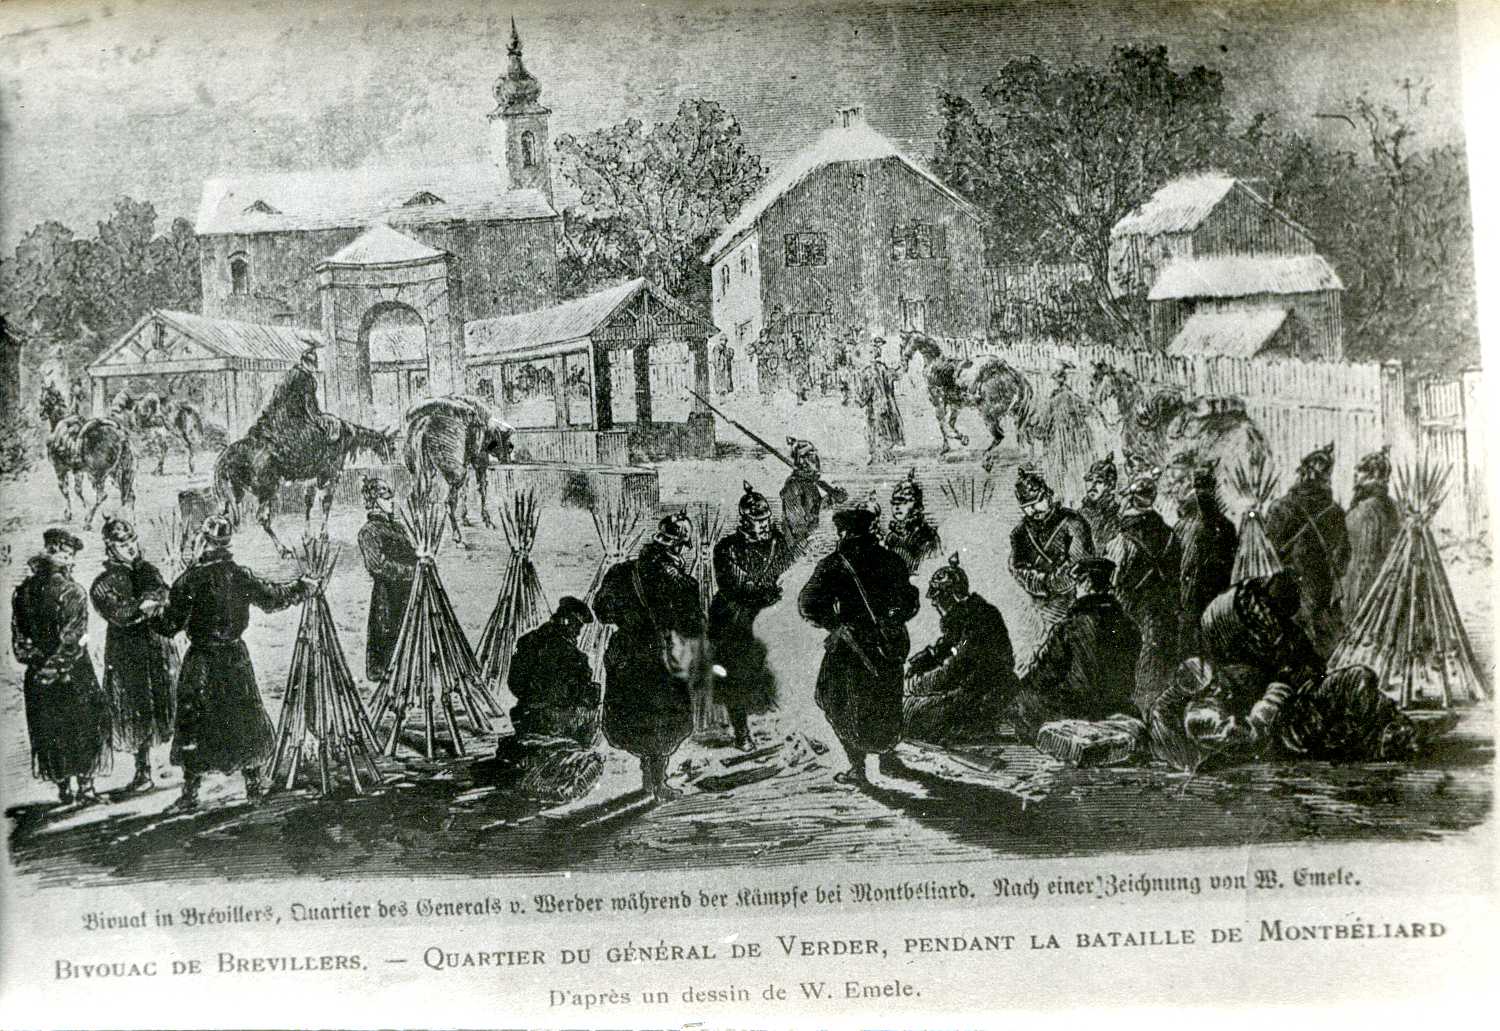 Brevilliers janvier 1871 bivouac quartier general von verder